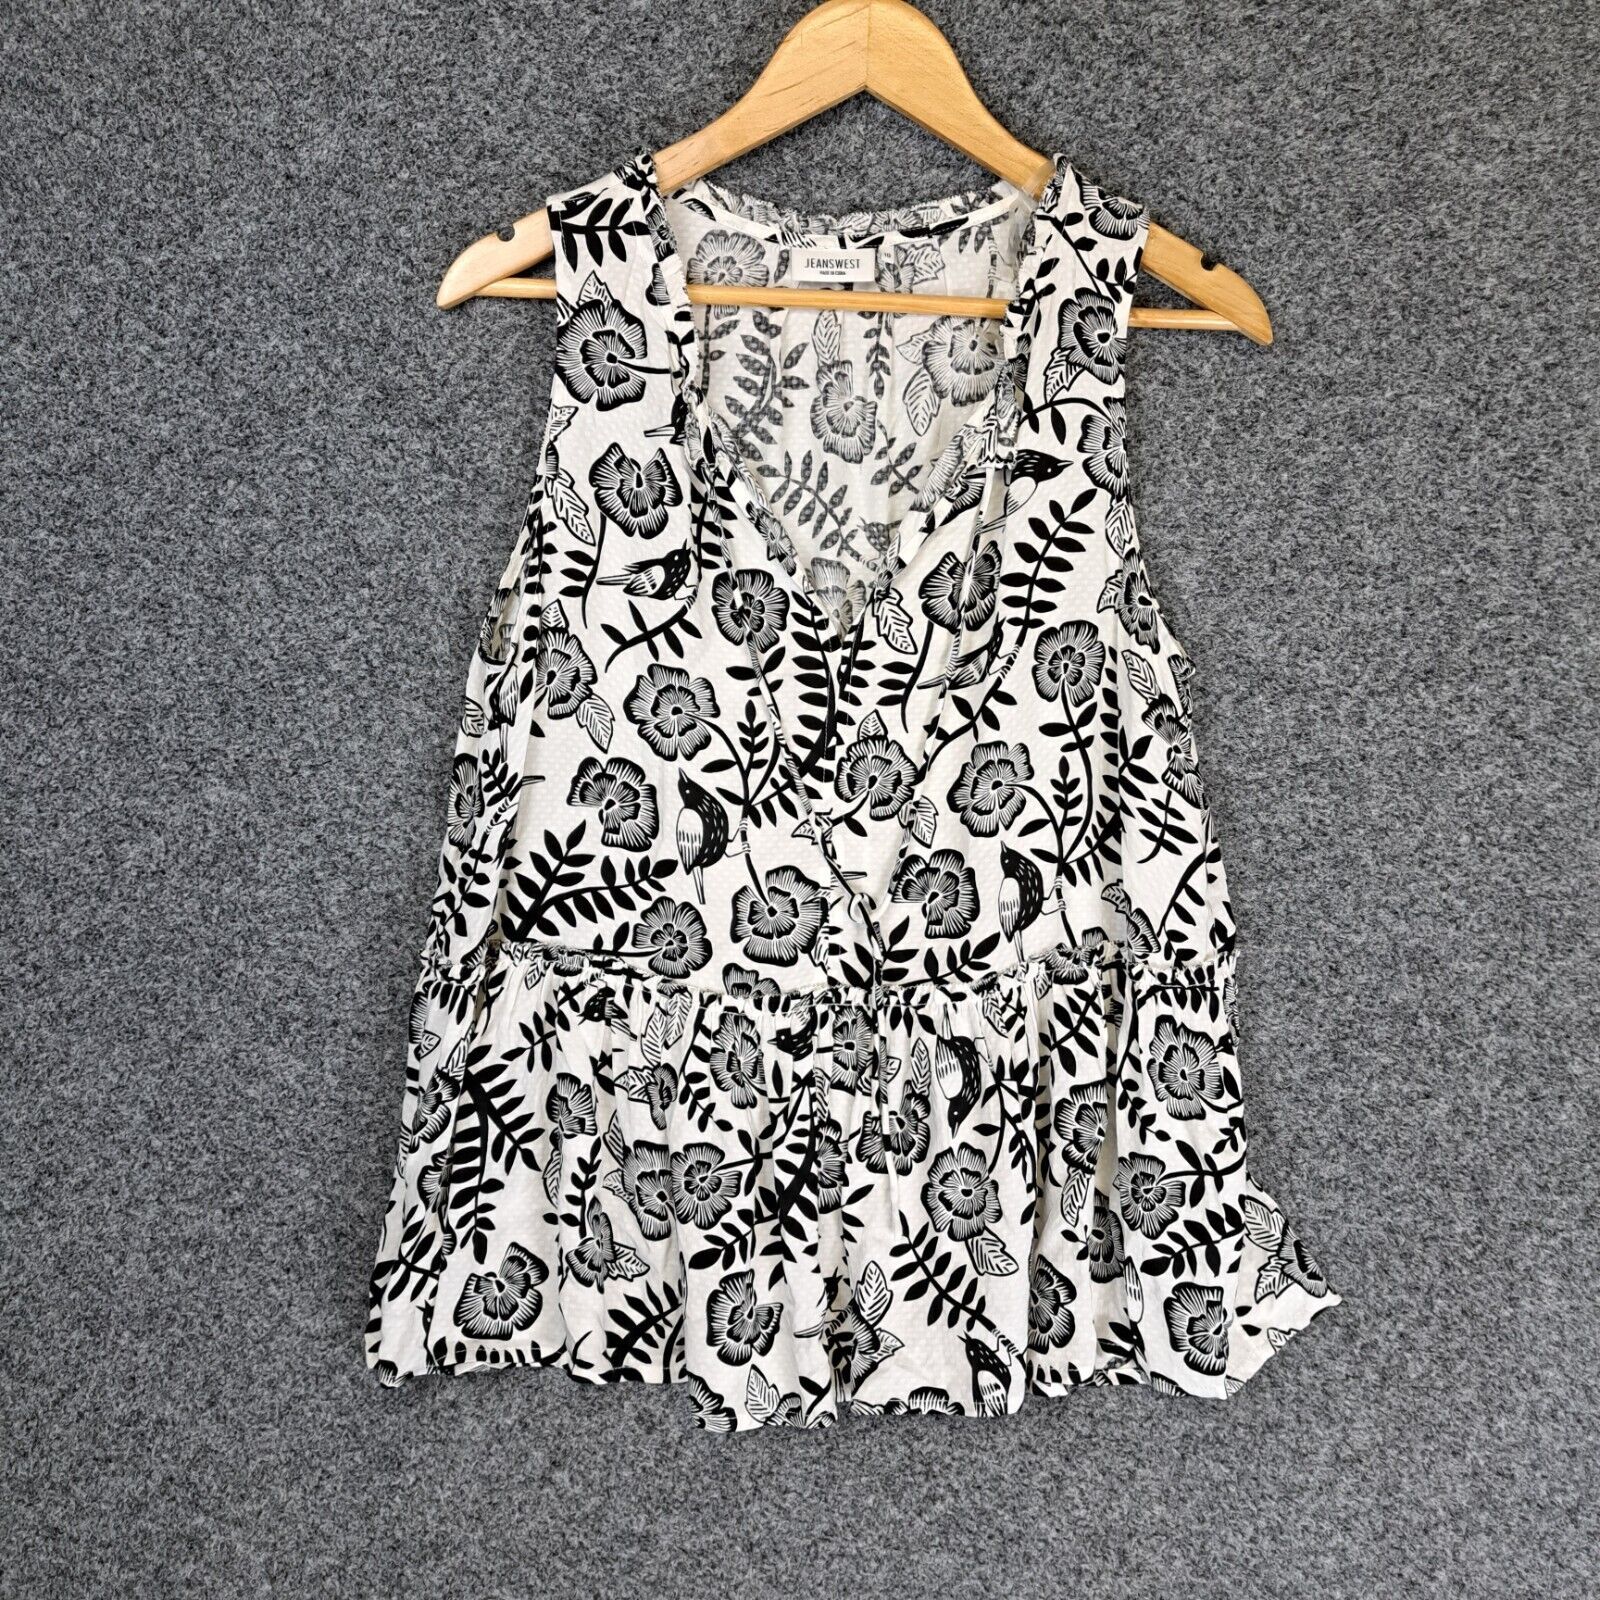 Jeanswest Womens Blouse Top Size 10 White Black Floral Animal Print | eBay AU